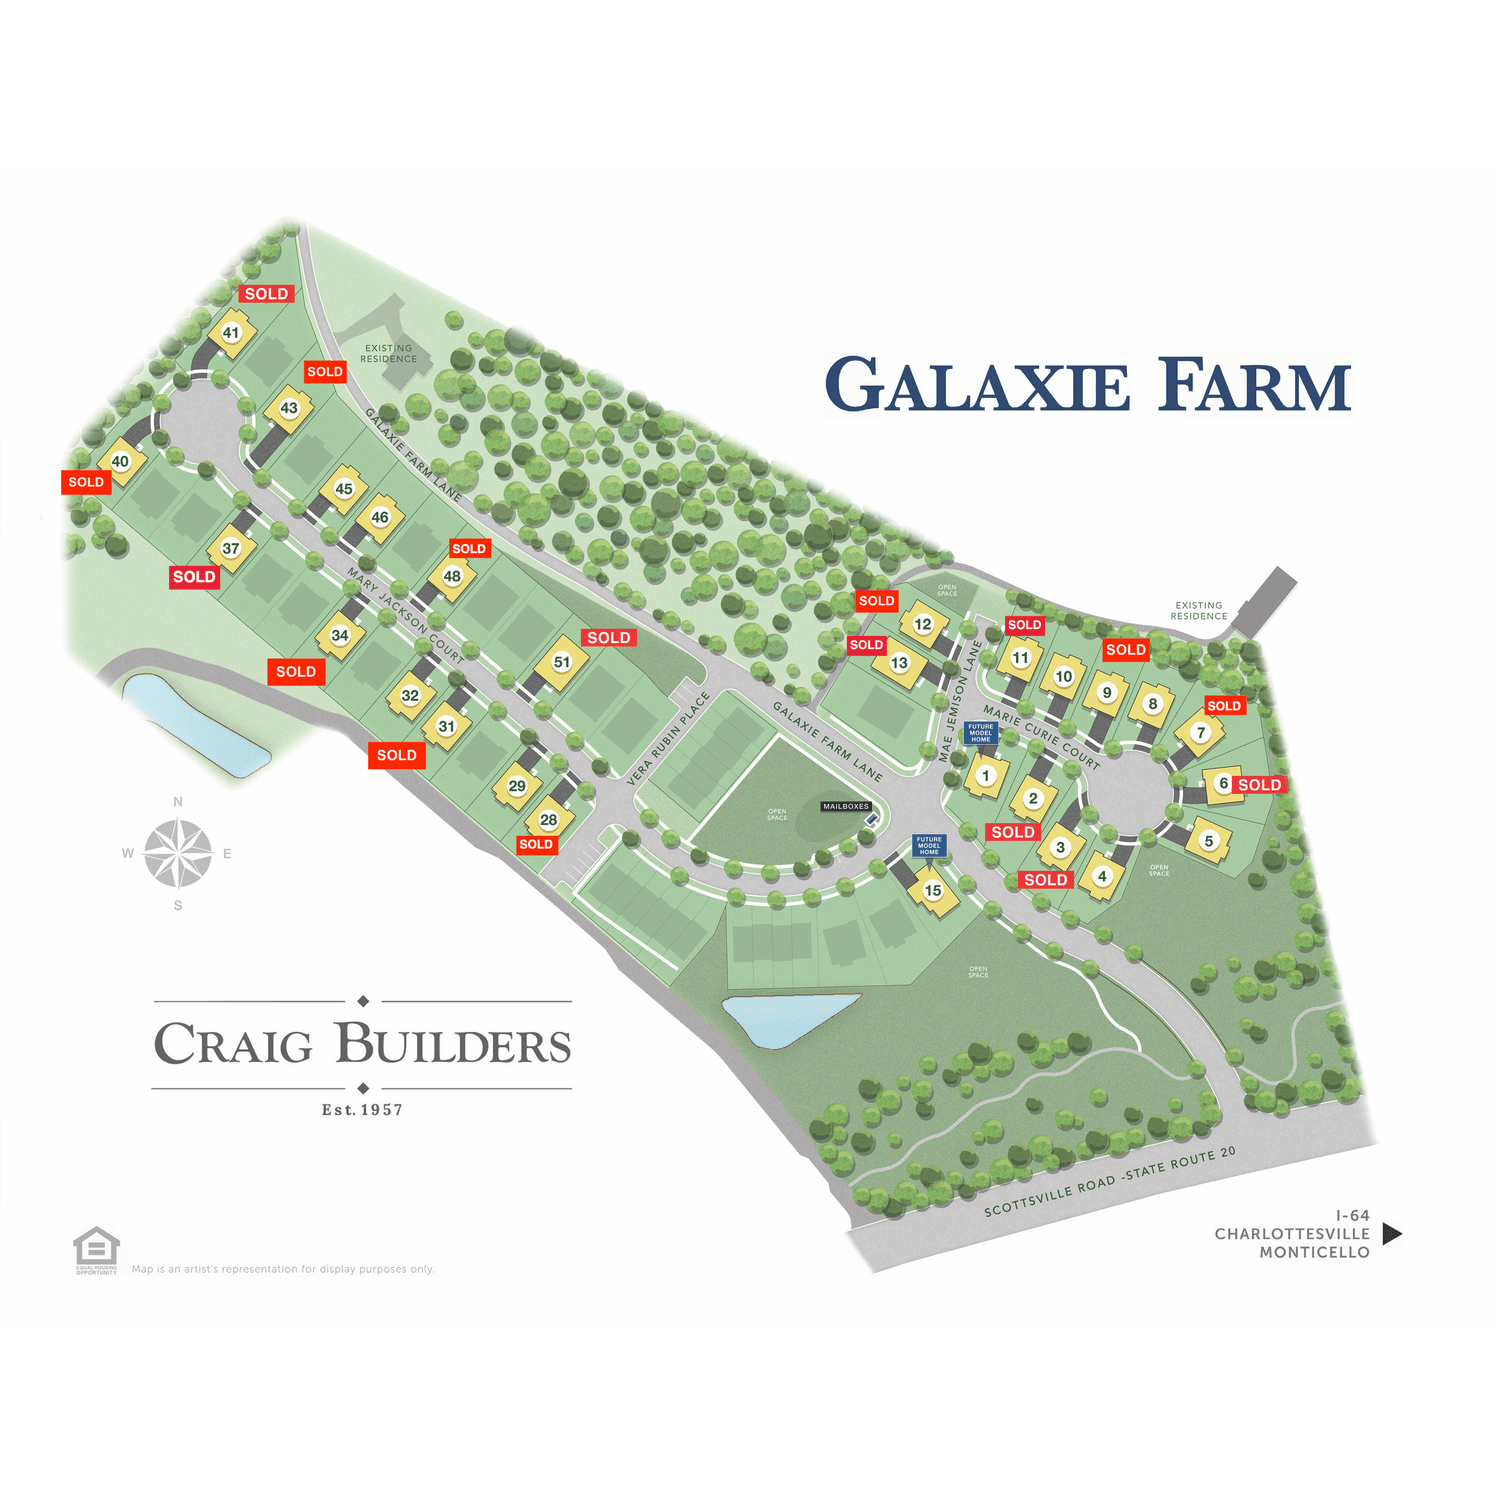 12. Galaxie Farm Gebäude bei 4006 Marie Curie Court, Charlottesville, VA 22902